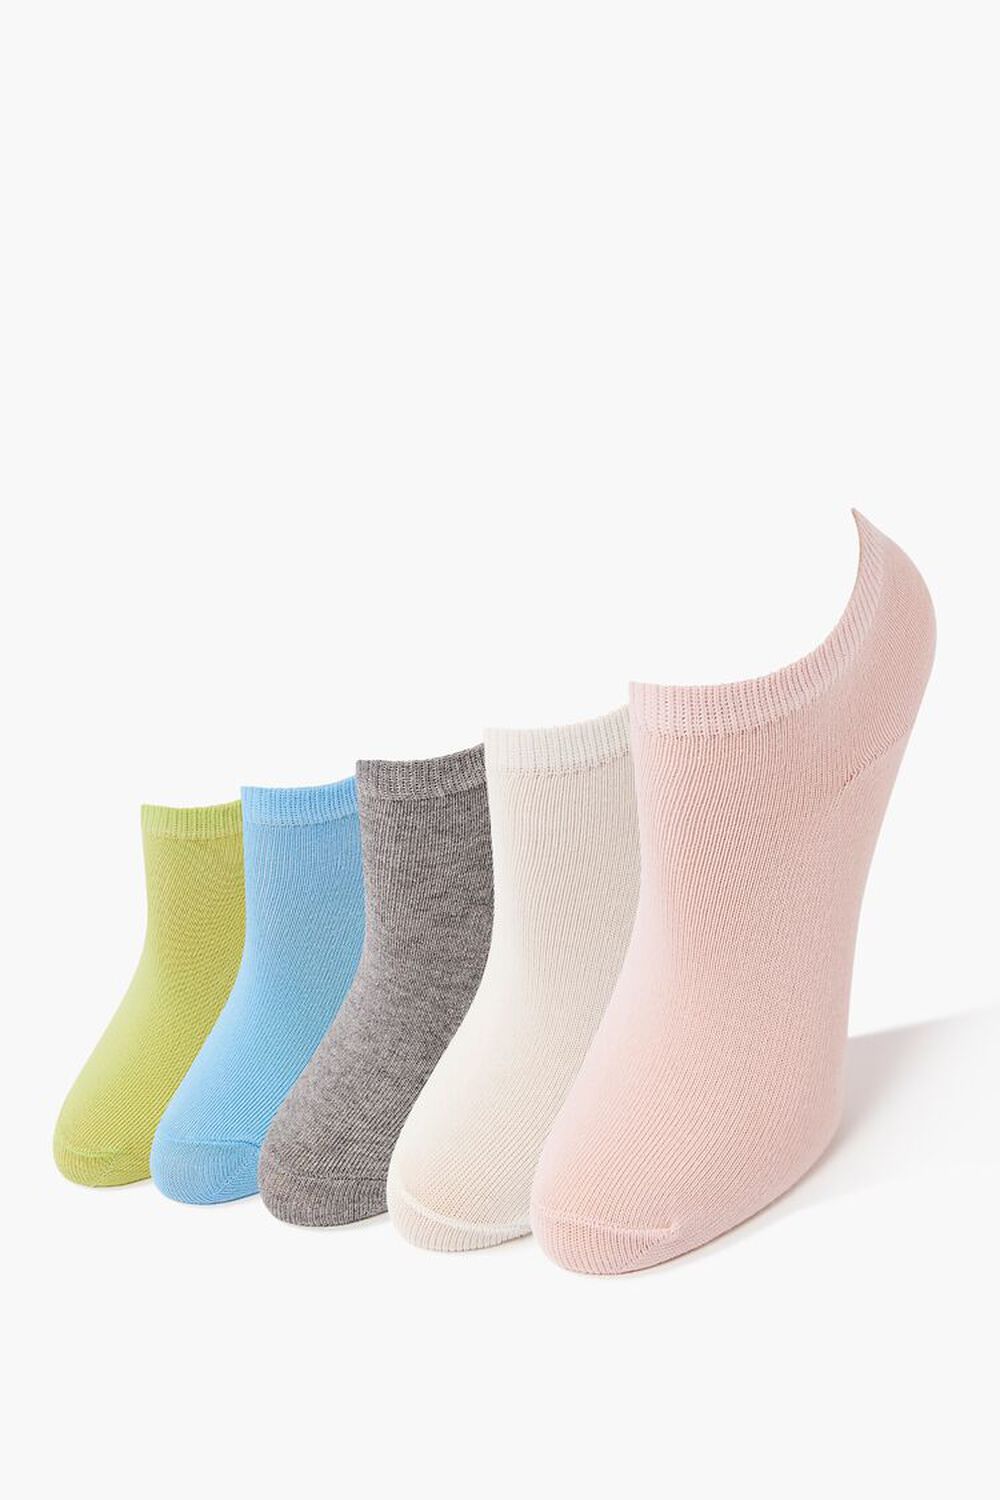 Girls Organically Grown Cotton Socks - 5 pack (Kids), image 1